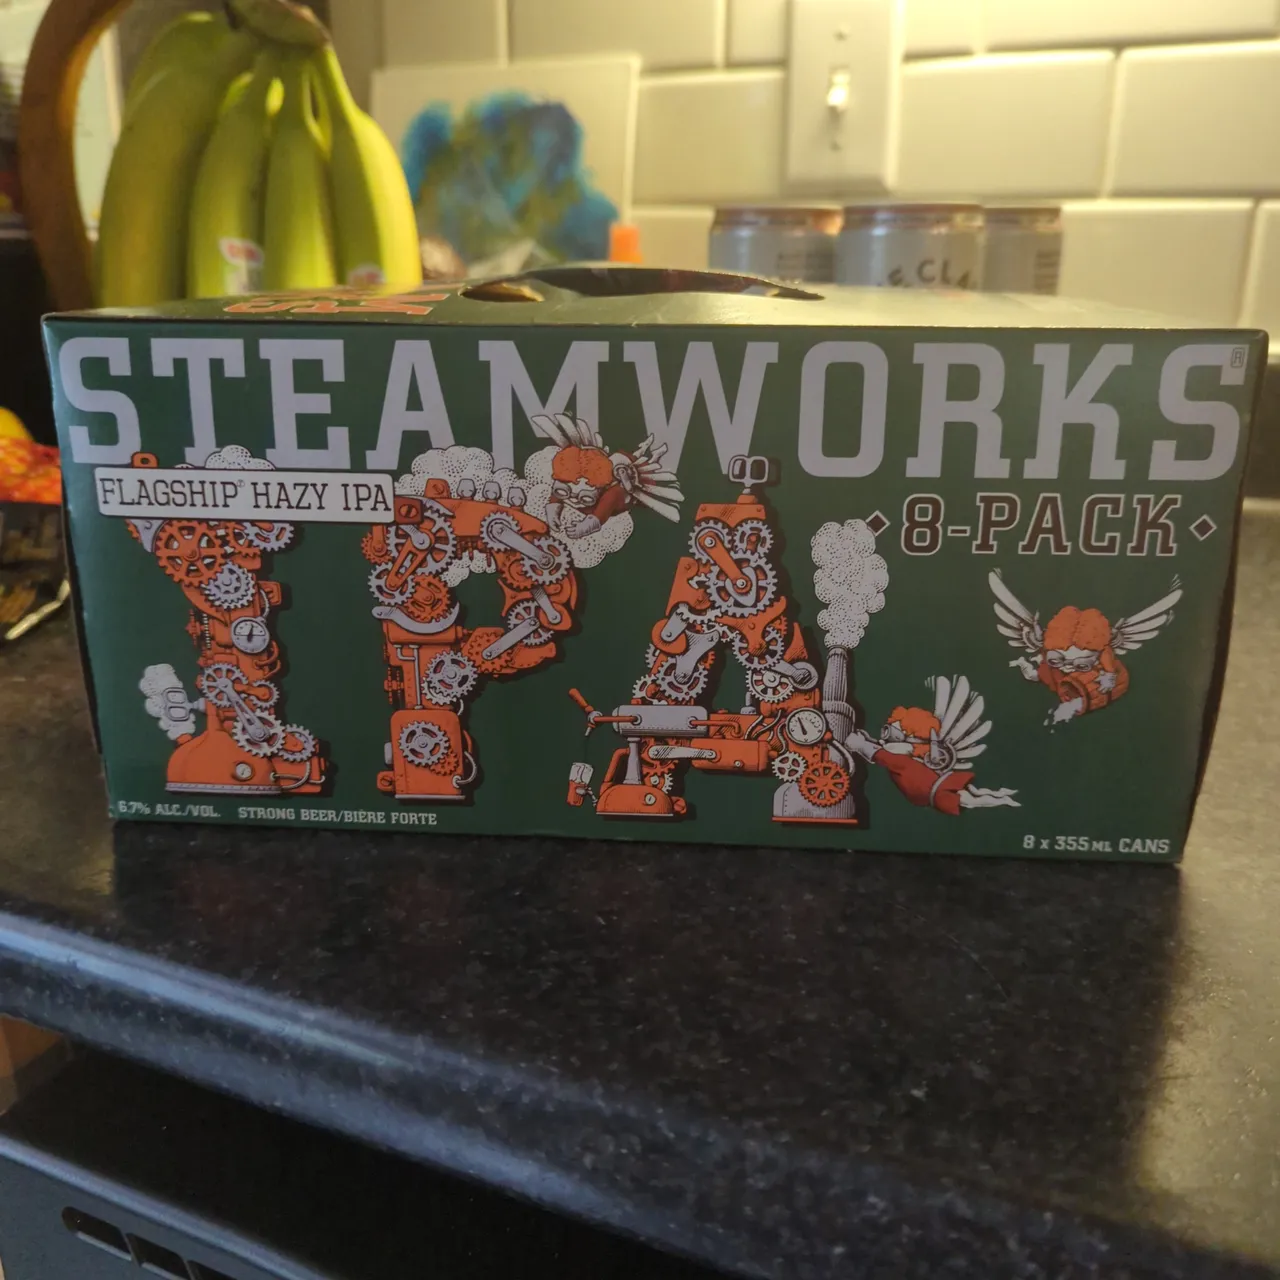 8 pack of SteamWorks Flagship Hazy IPA photo 1